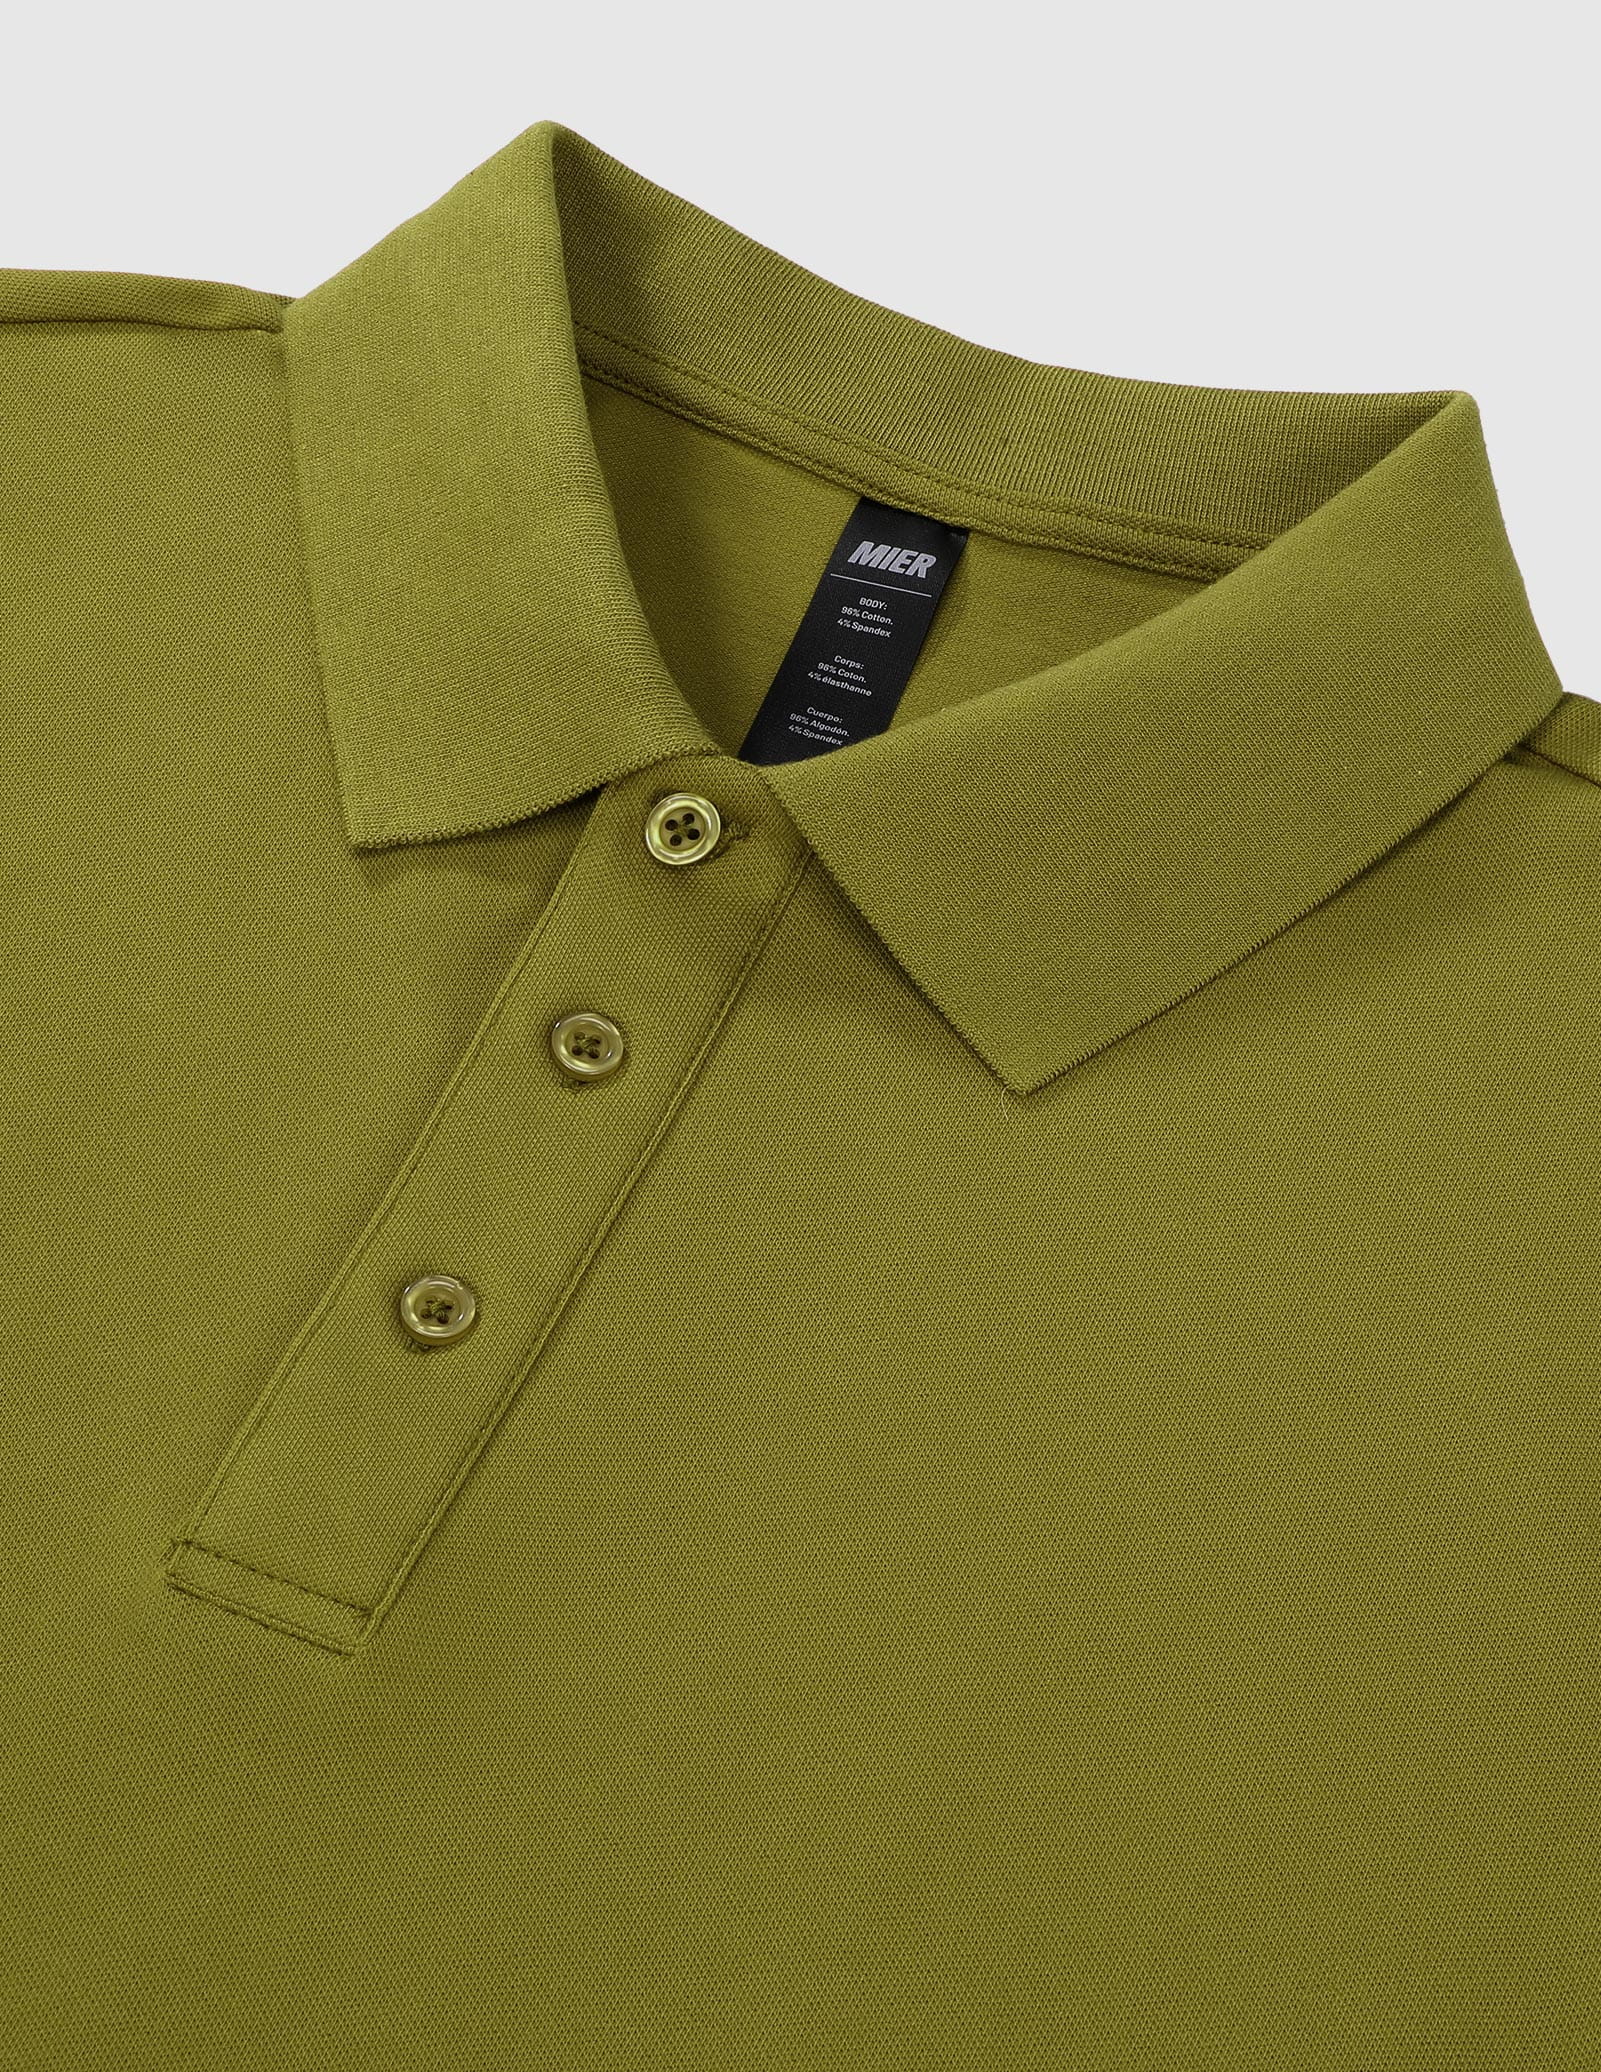 Men's Cotton Polo Shirts Short Sleeve Golf Tennis Collared Shirt